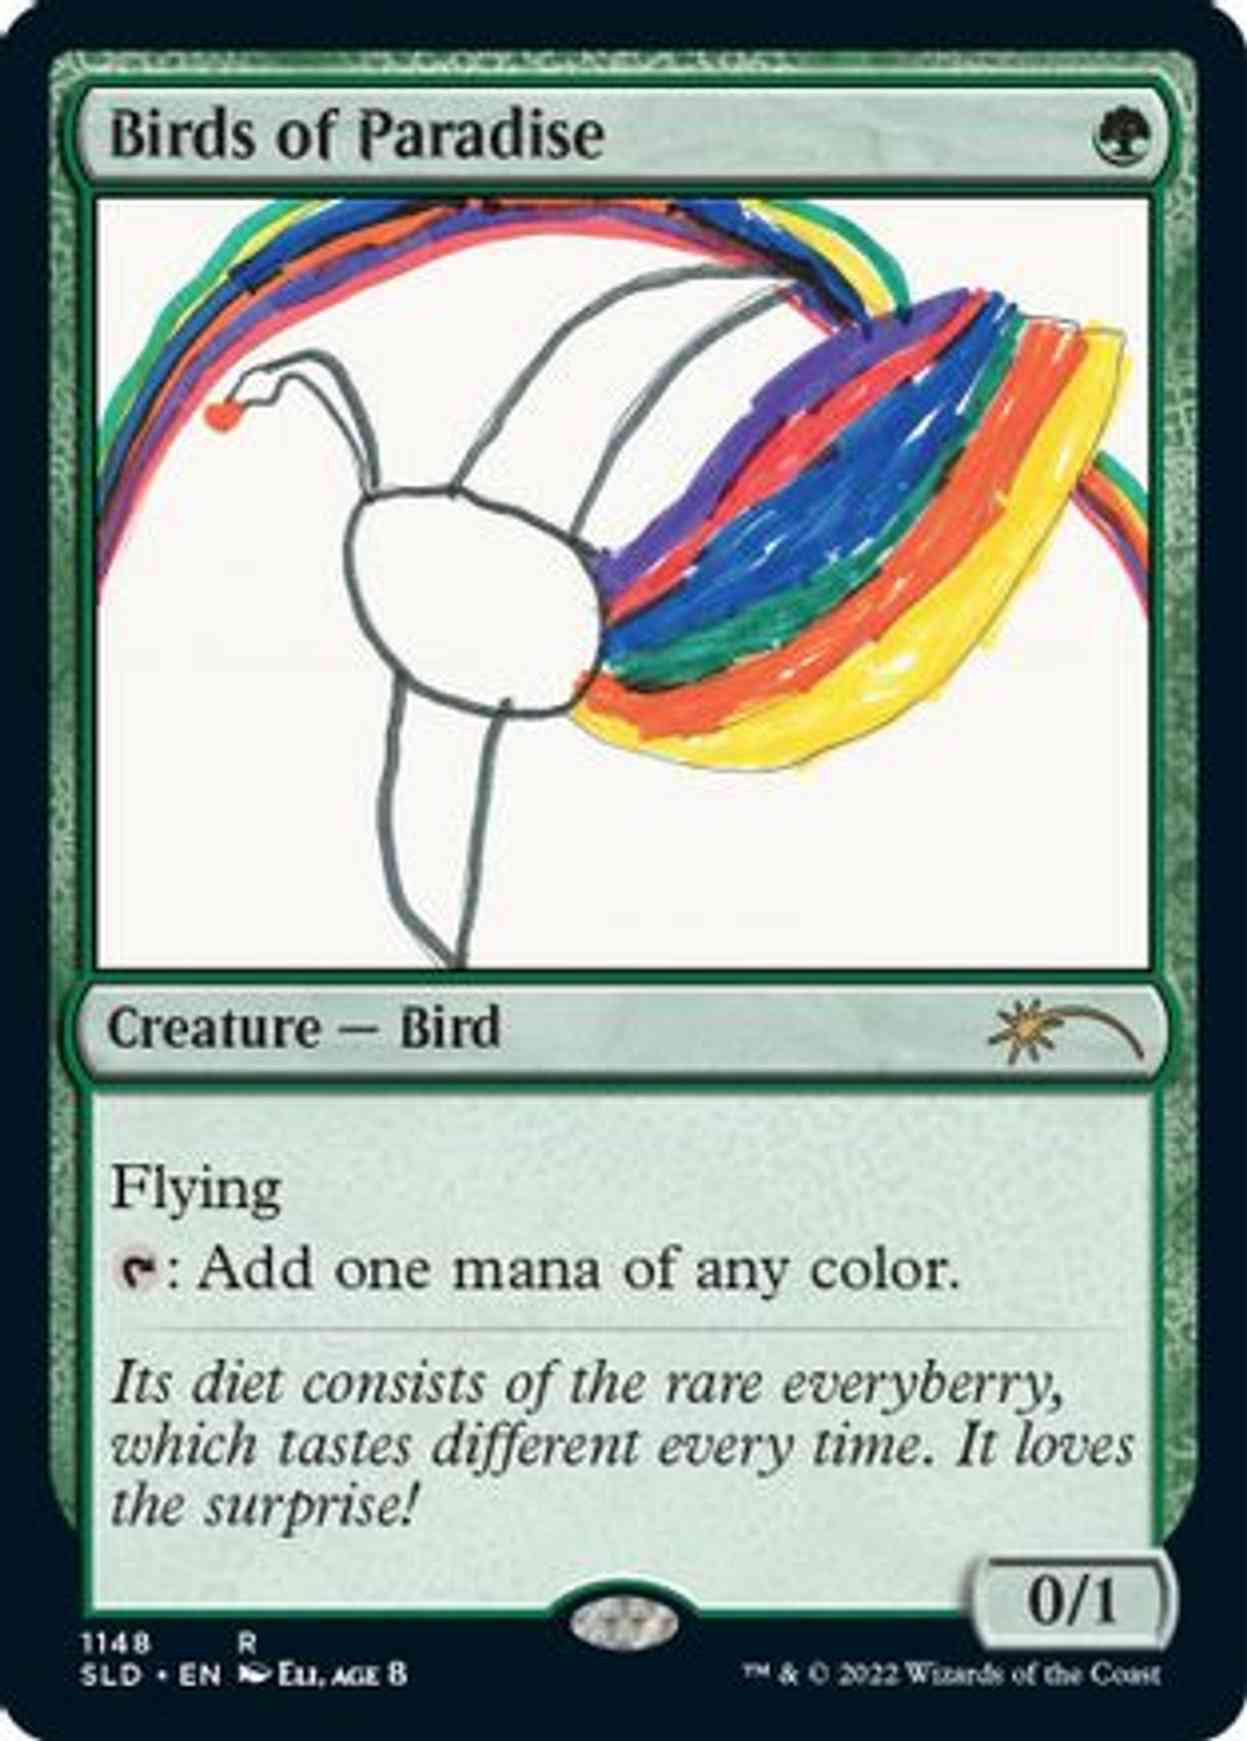 Birds of Paradise (1148) magic card front